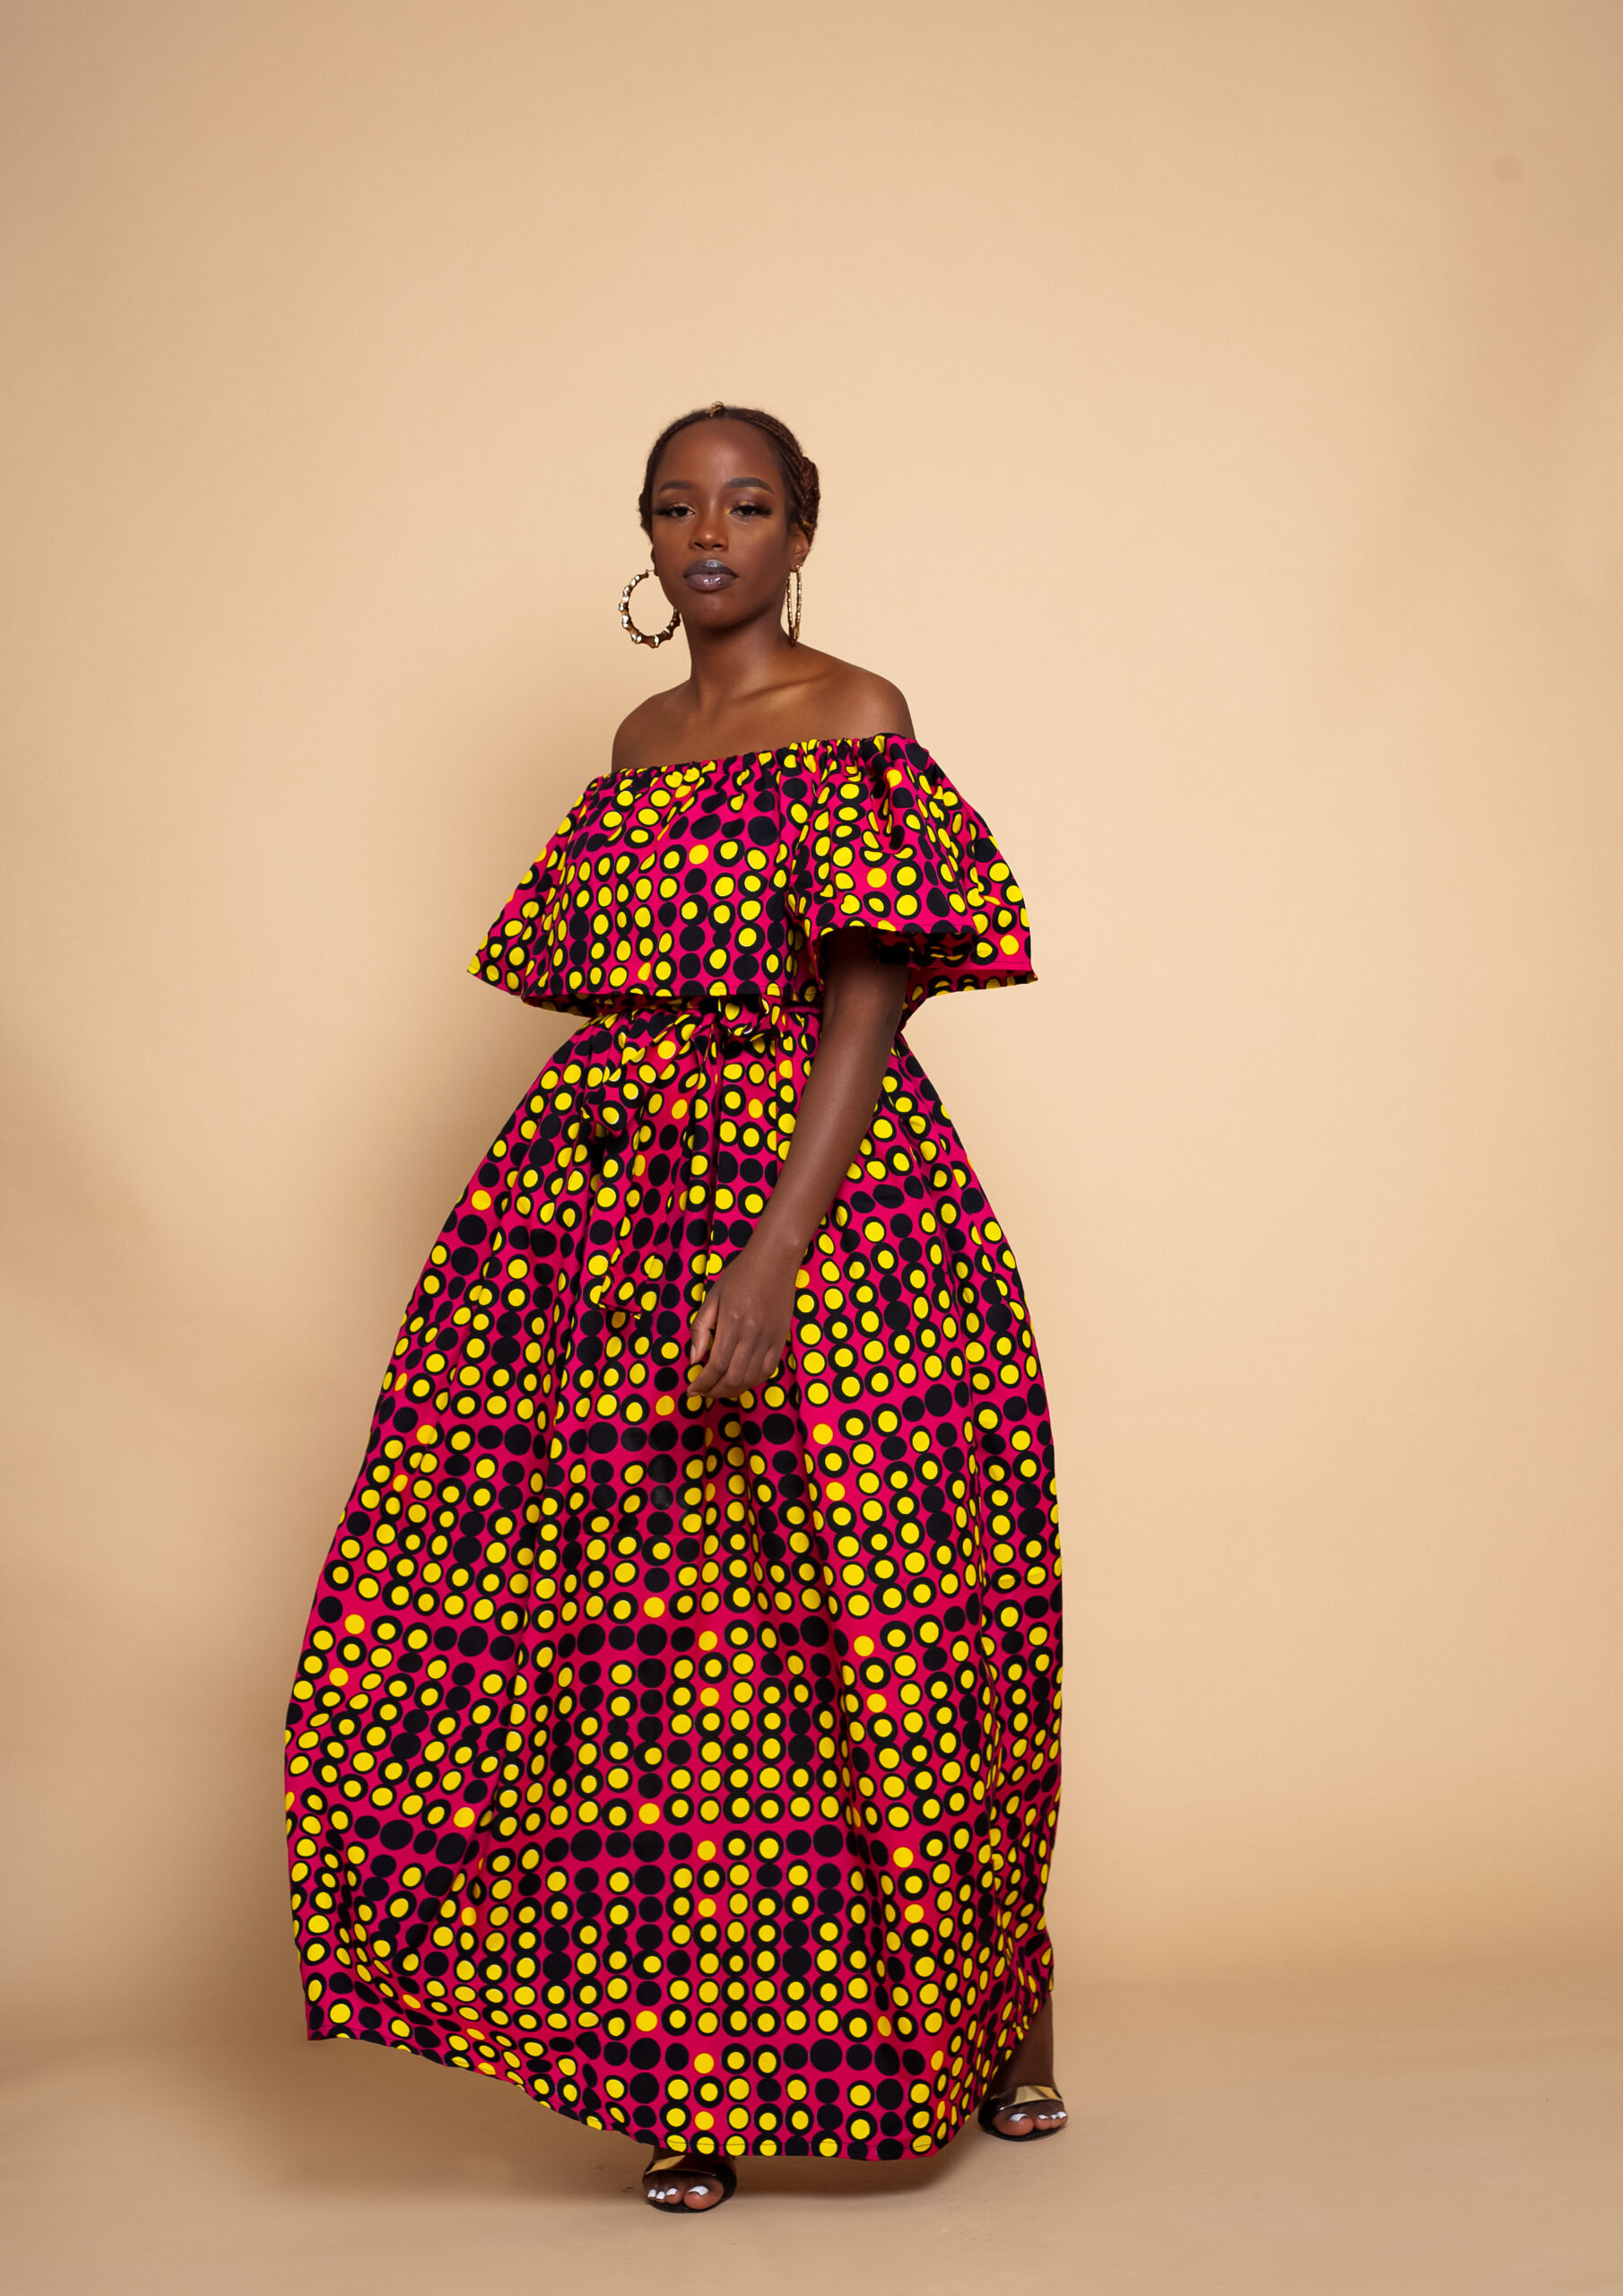 Portfolio - African Fashion Awards